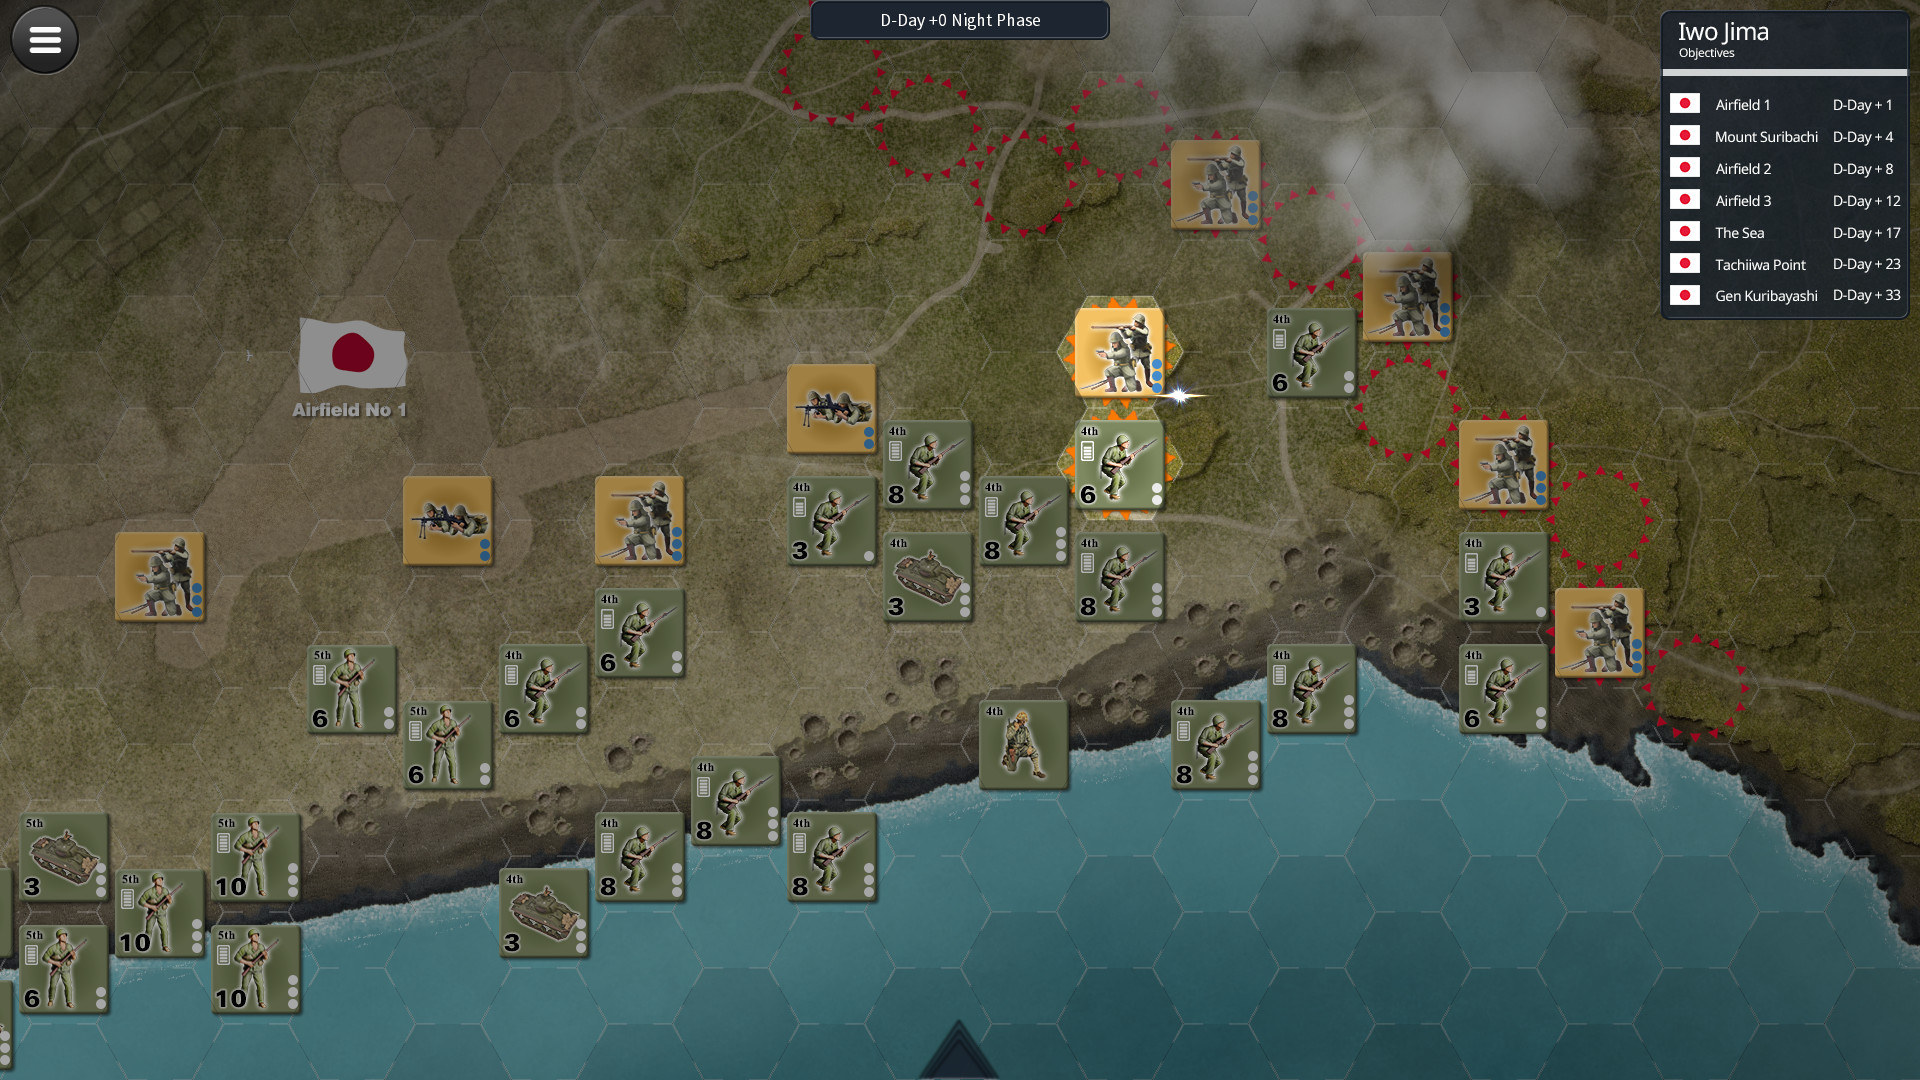 Battle for Iwo Jima Free Download